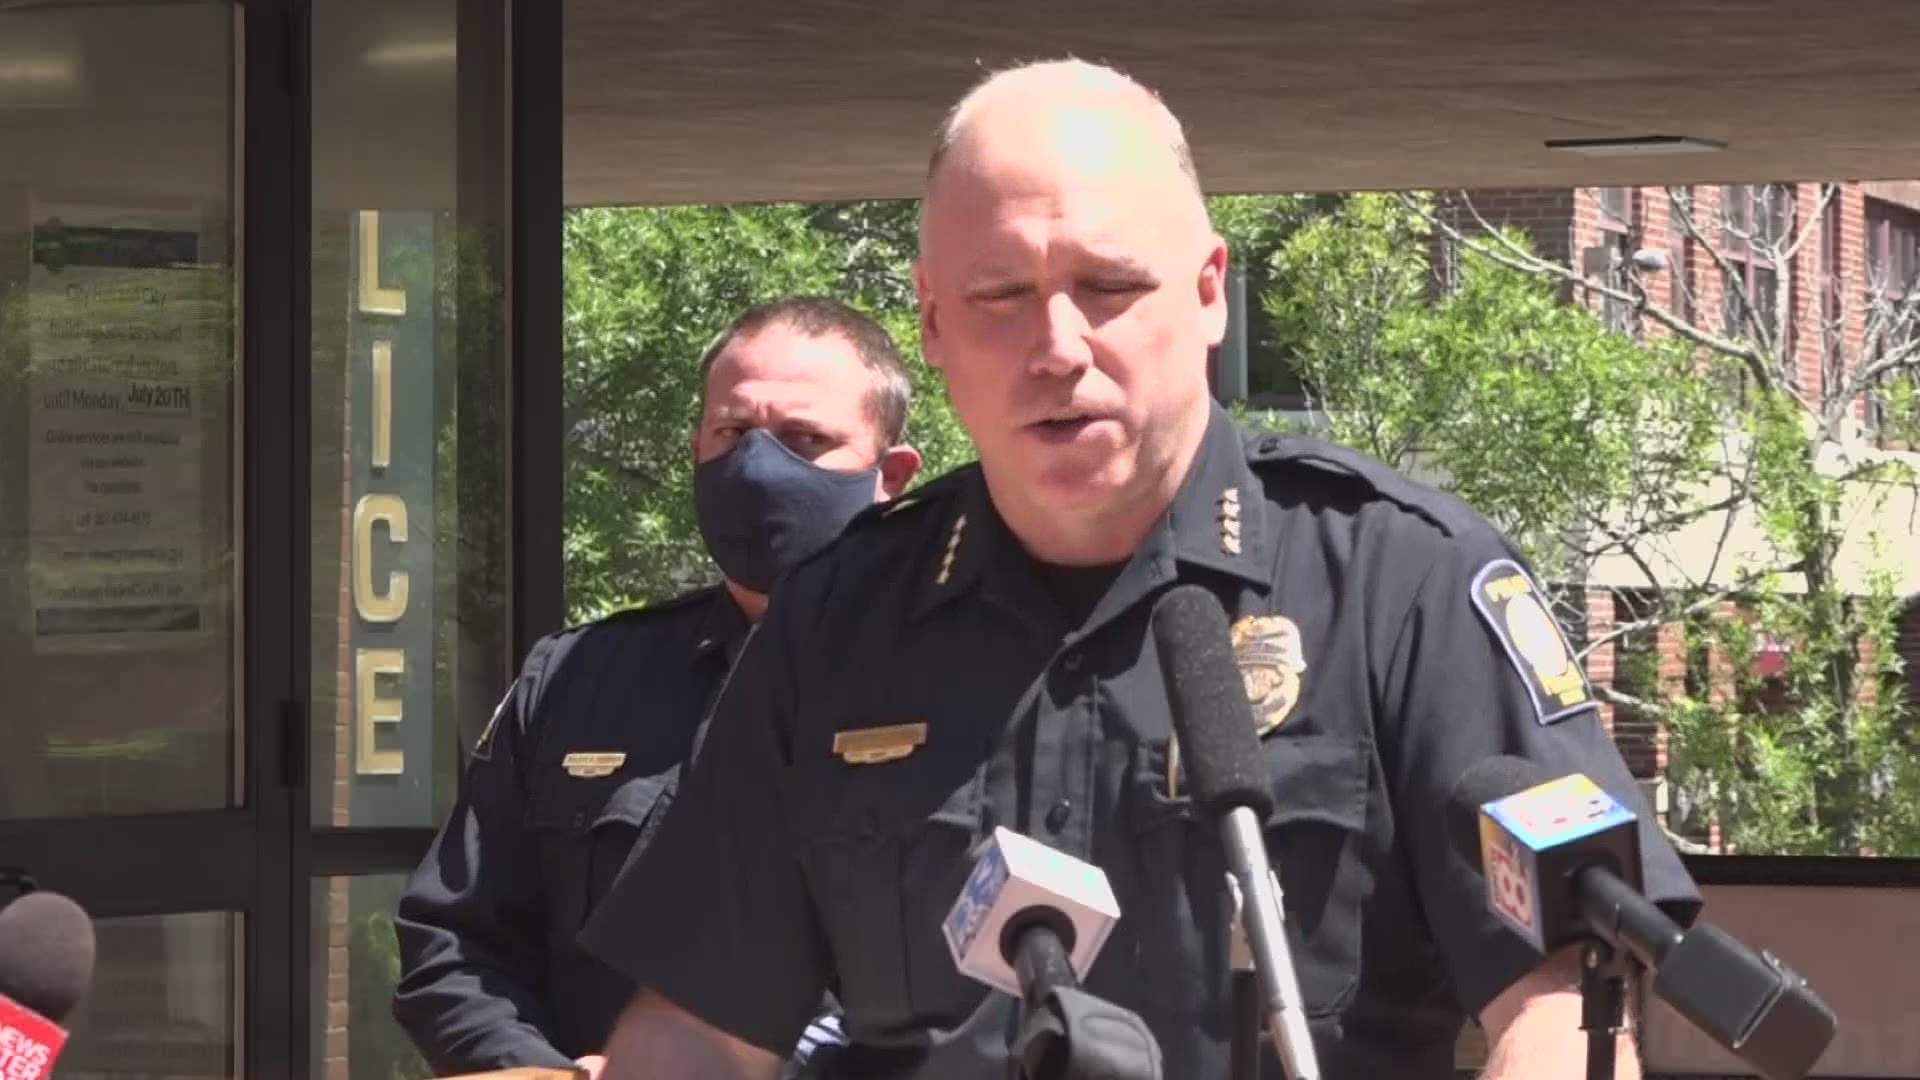 Portland Police speak to the media regarding shots fired at its garage on Sunday night.